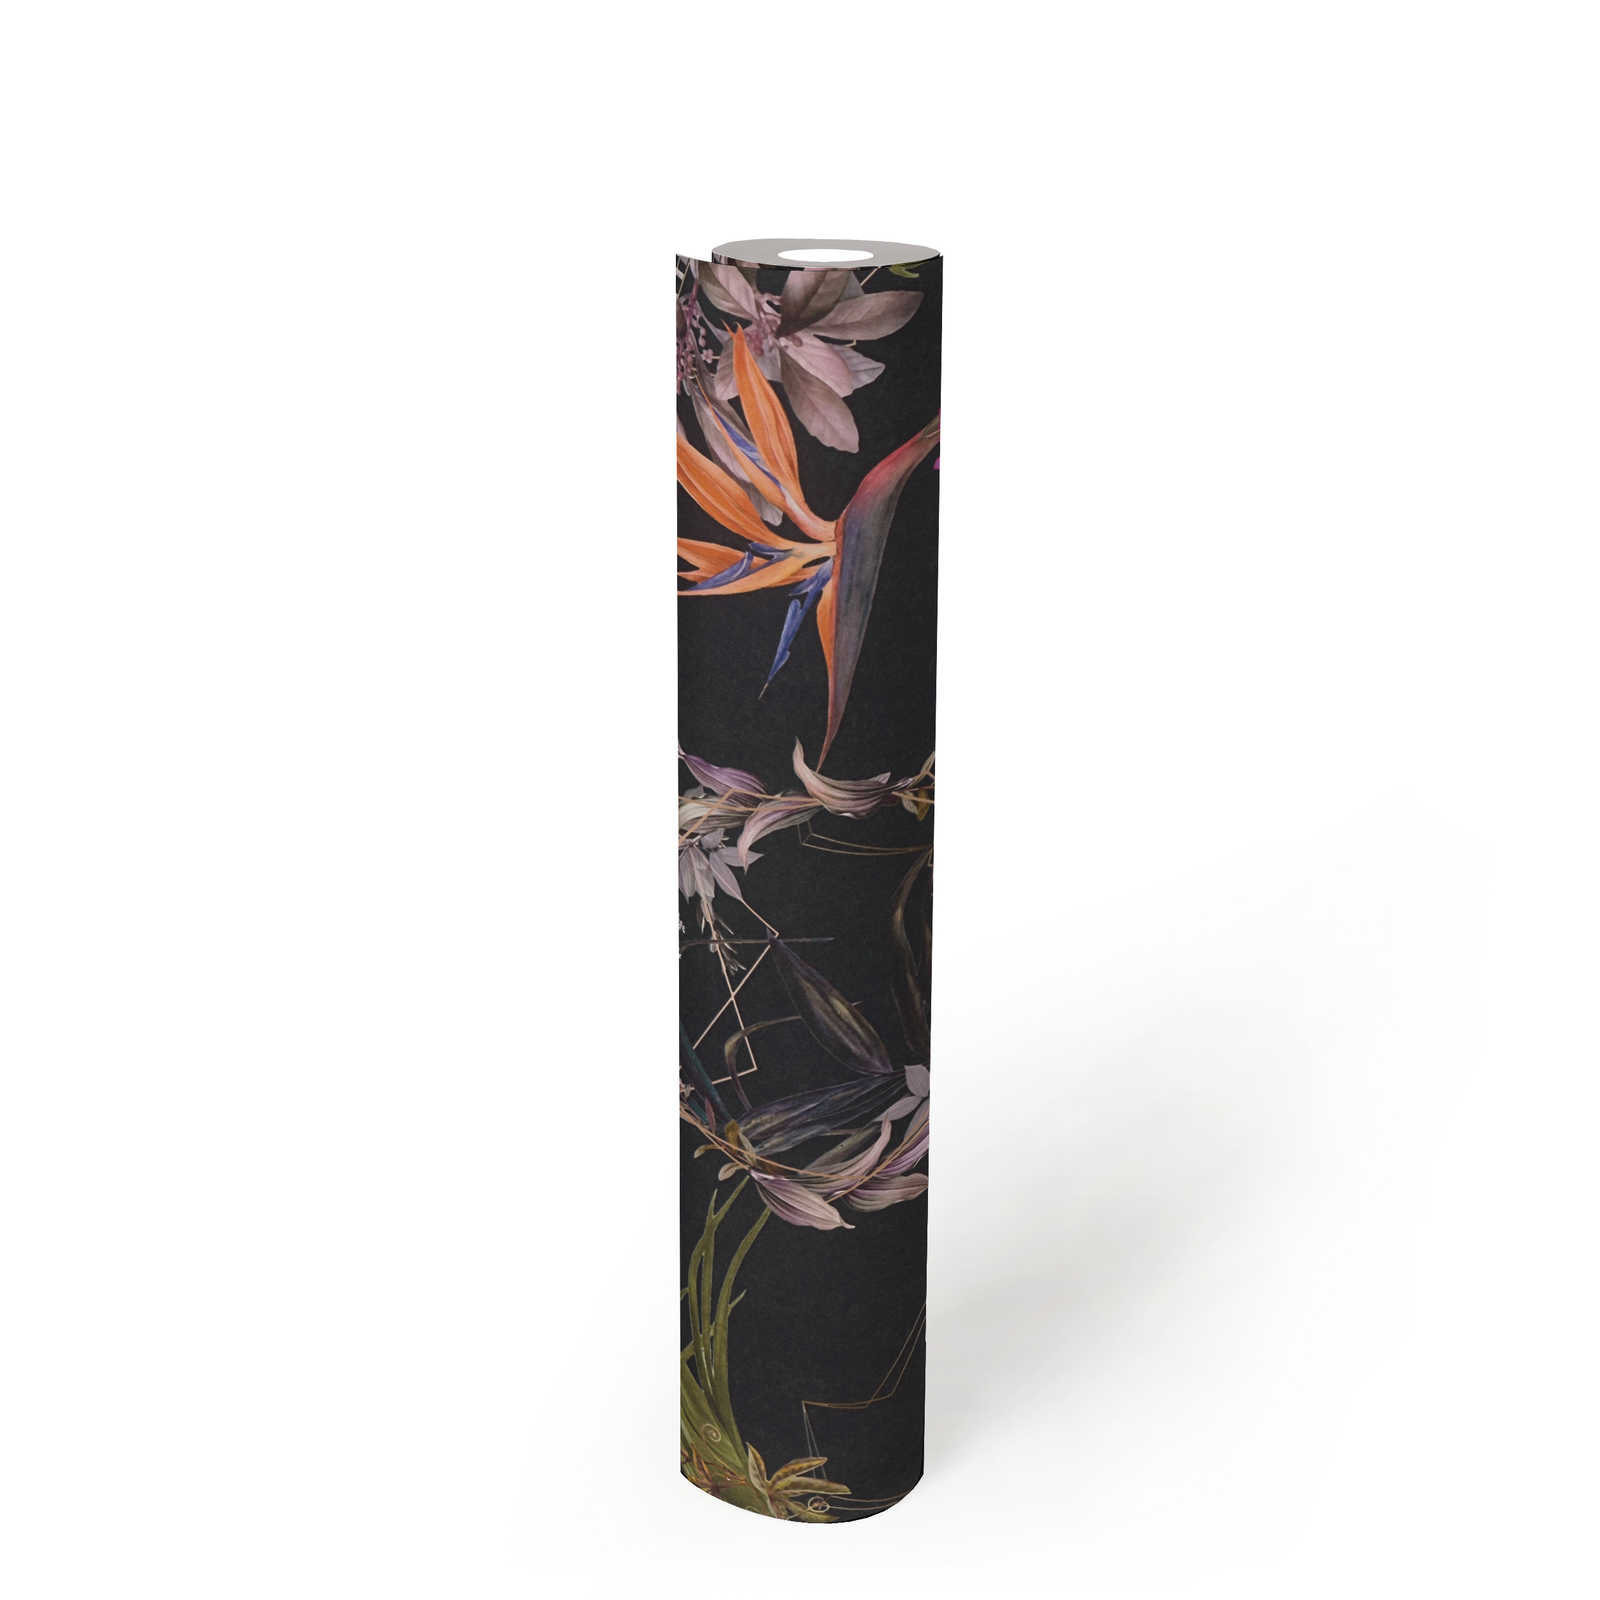             Papel pintado floral oscuro Hibiscus & Leaves - Colorido, Negro
        